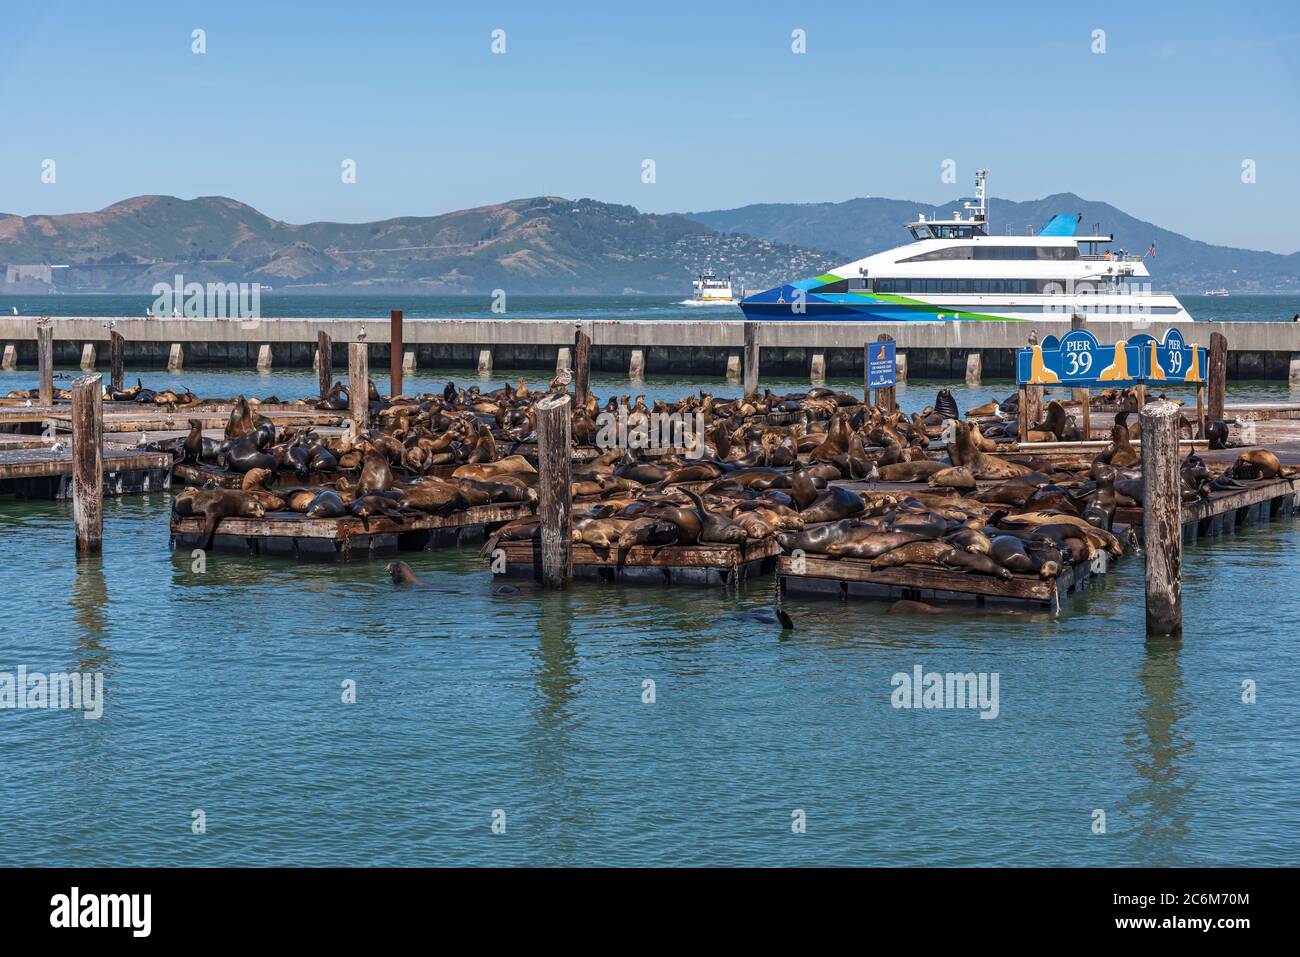 Pier 39 San Francisco Kalifornien Robben. Stockfoto